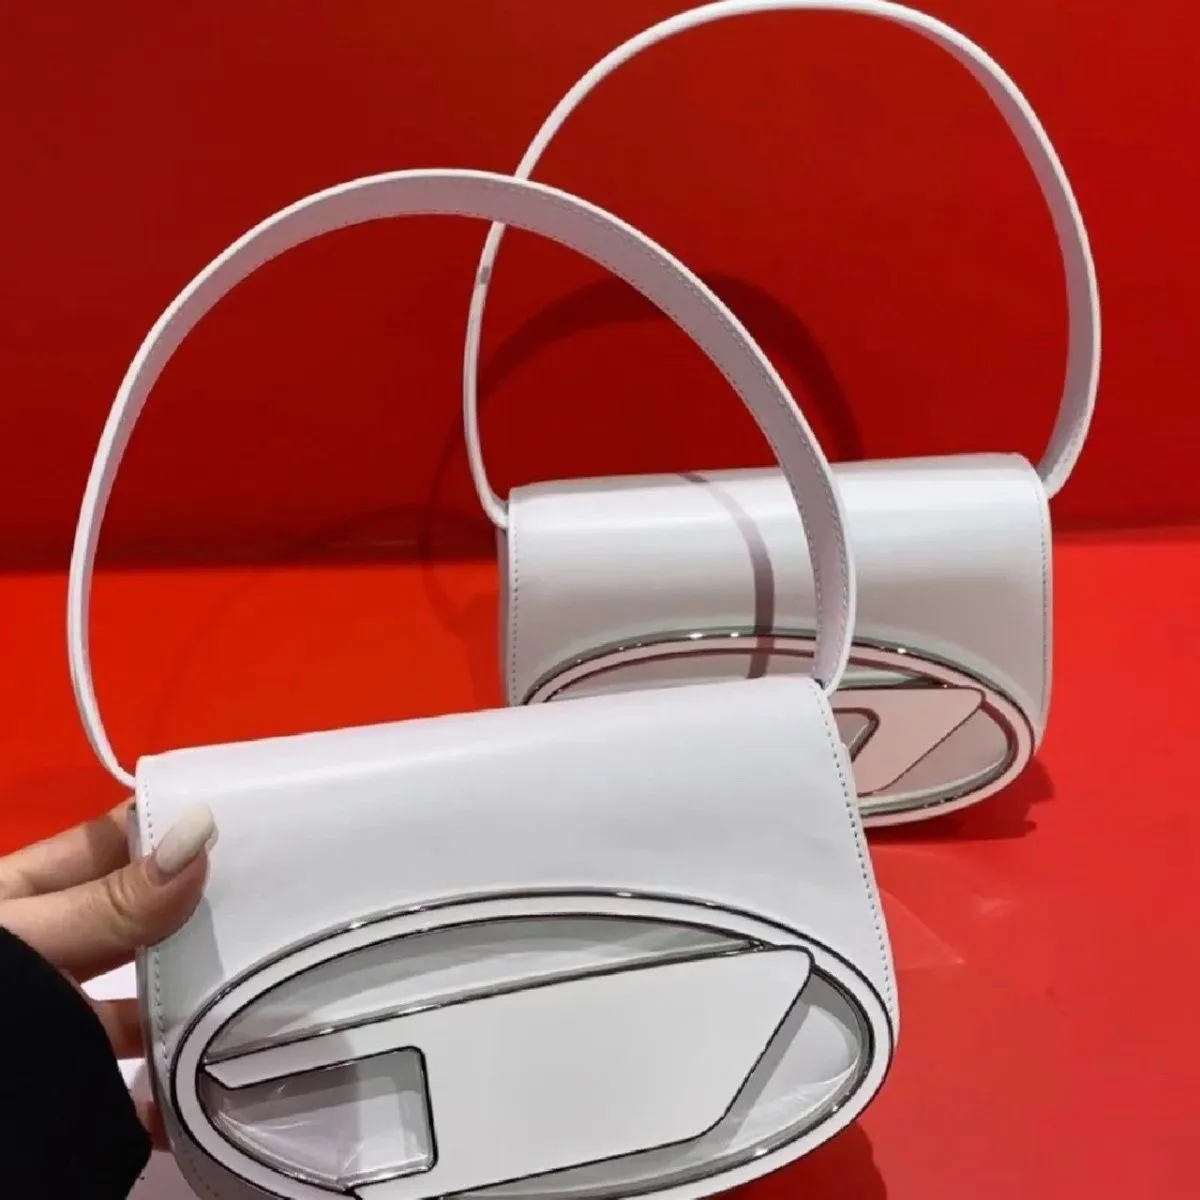 Designer Bag DIESEEL Women's Handbag Shoulder Bags Luxury leather semi-circle clamshell Saddle Bag Handheld Crossbody underarm bag from versatile fashion brand